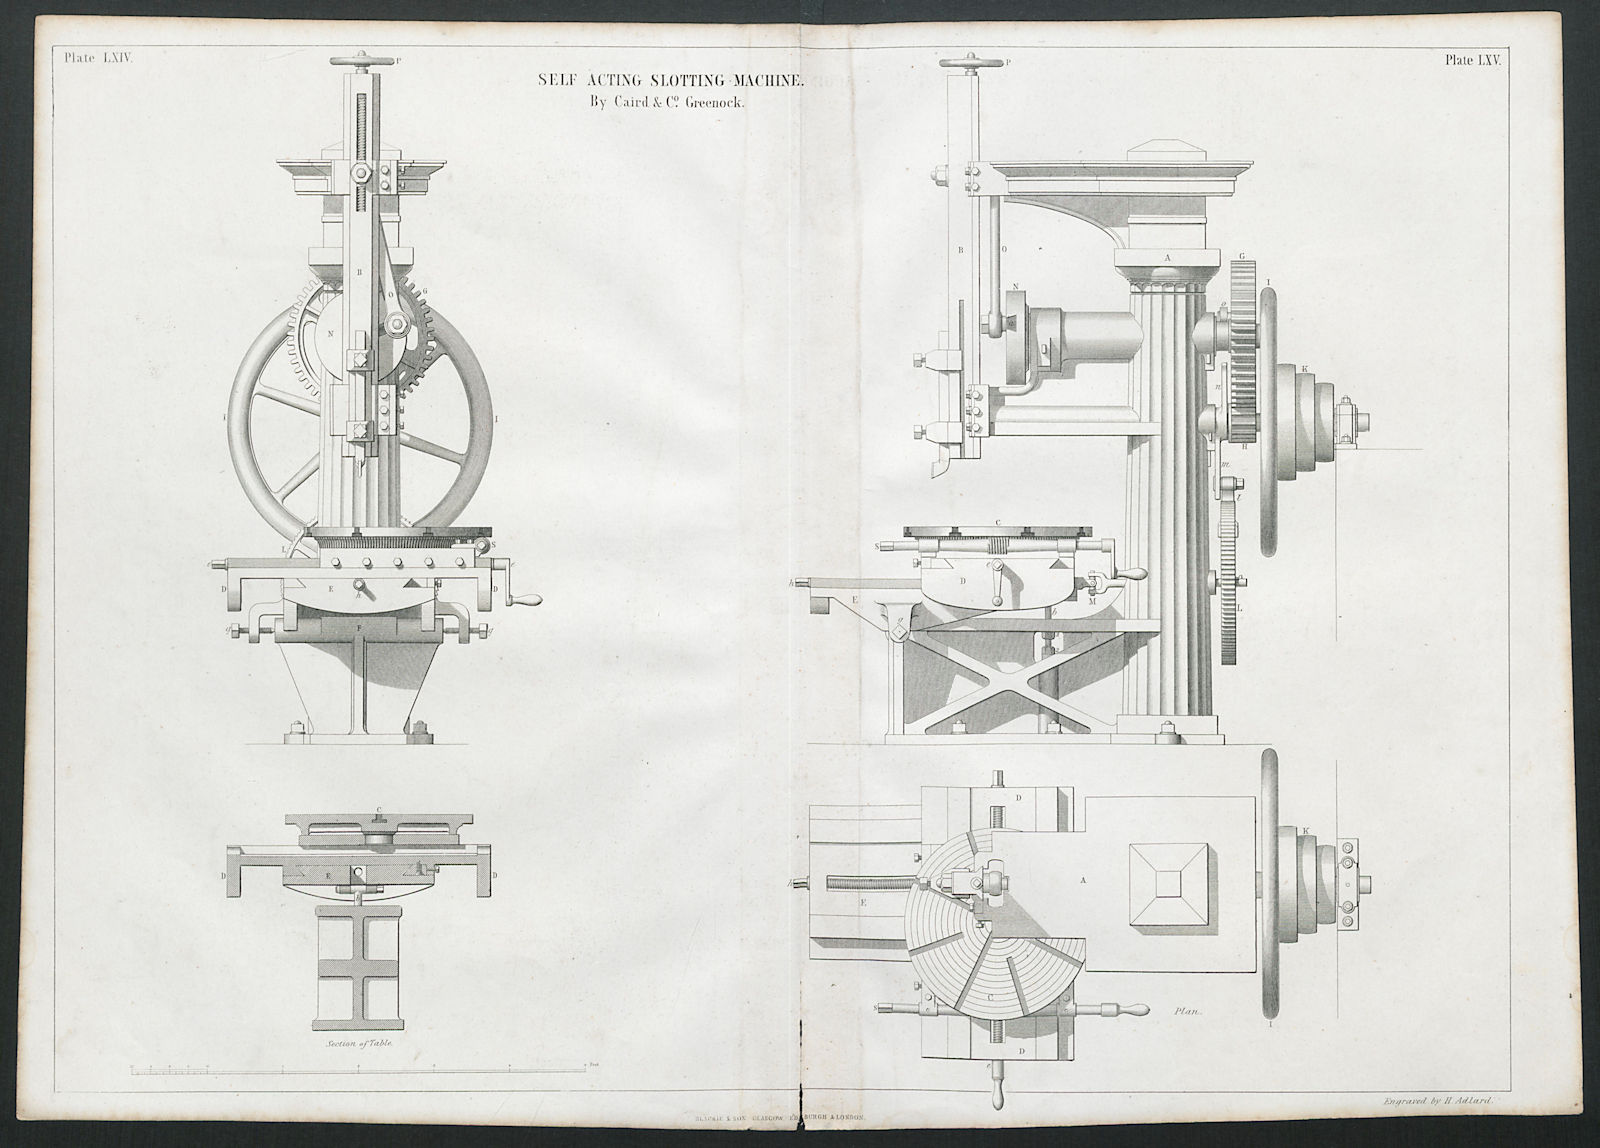 19C ENGINEERING DRAWING Self acting slotting machine. Caird & Co., Greenock 1847